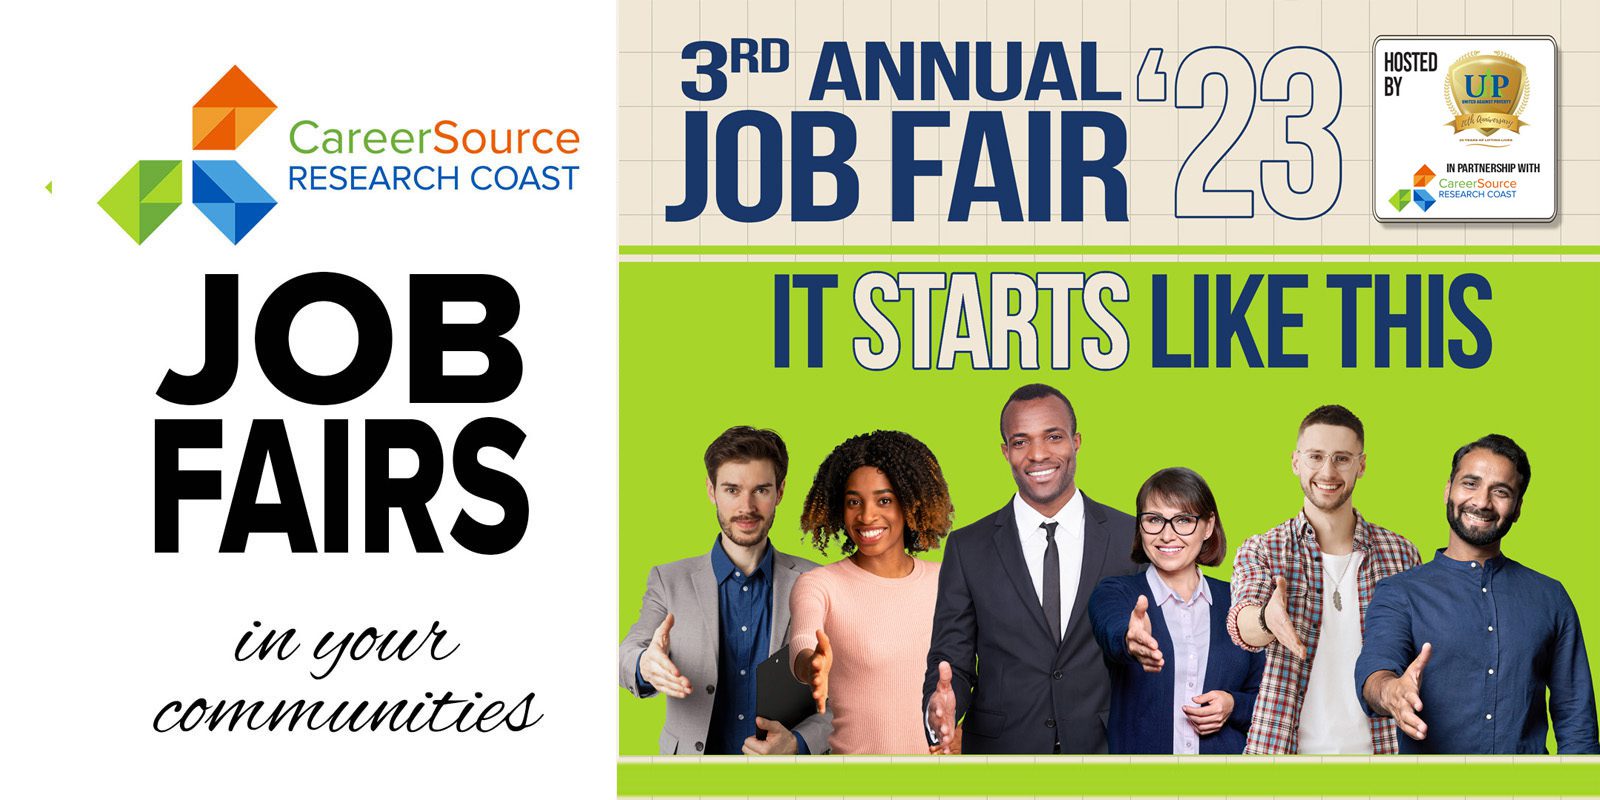 3rd Annual Job Fair CareerSource Research Coast